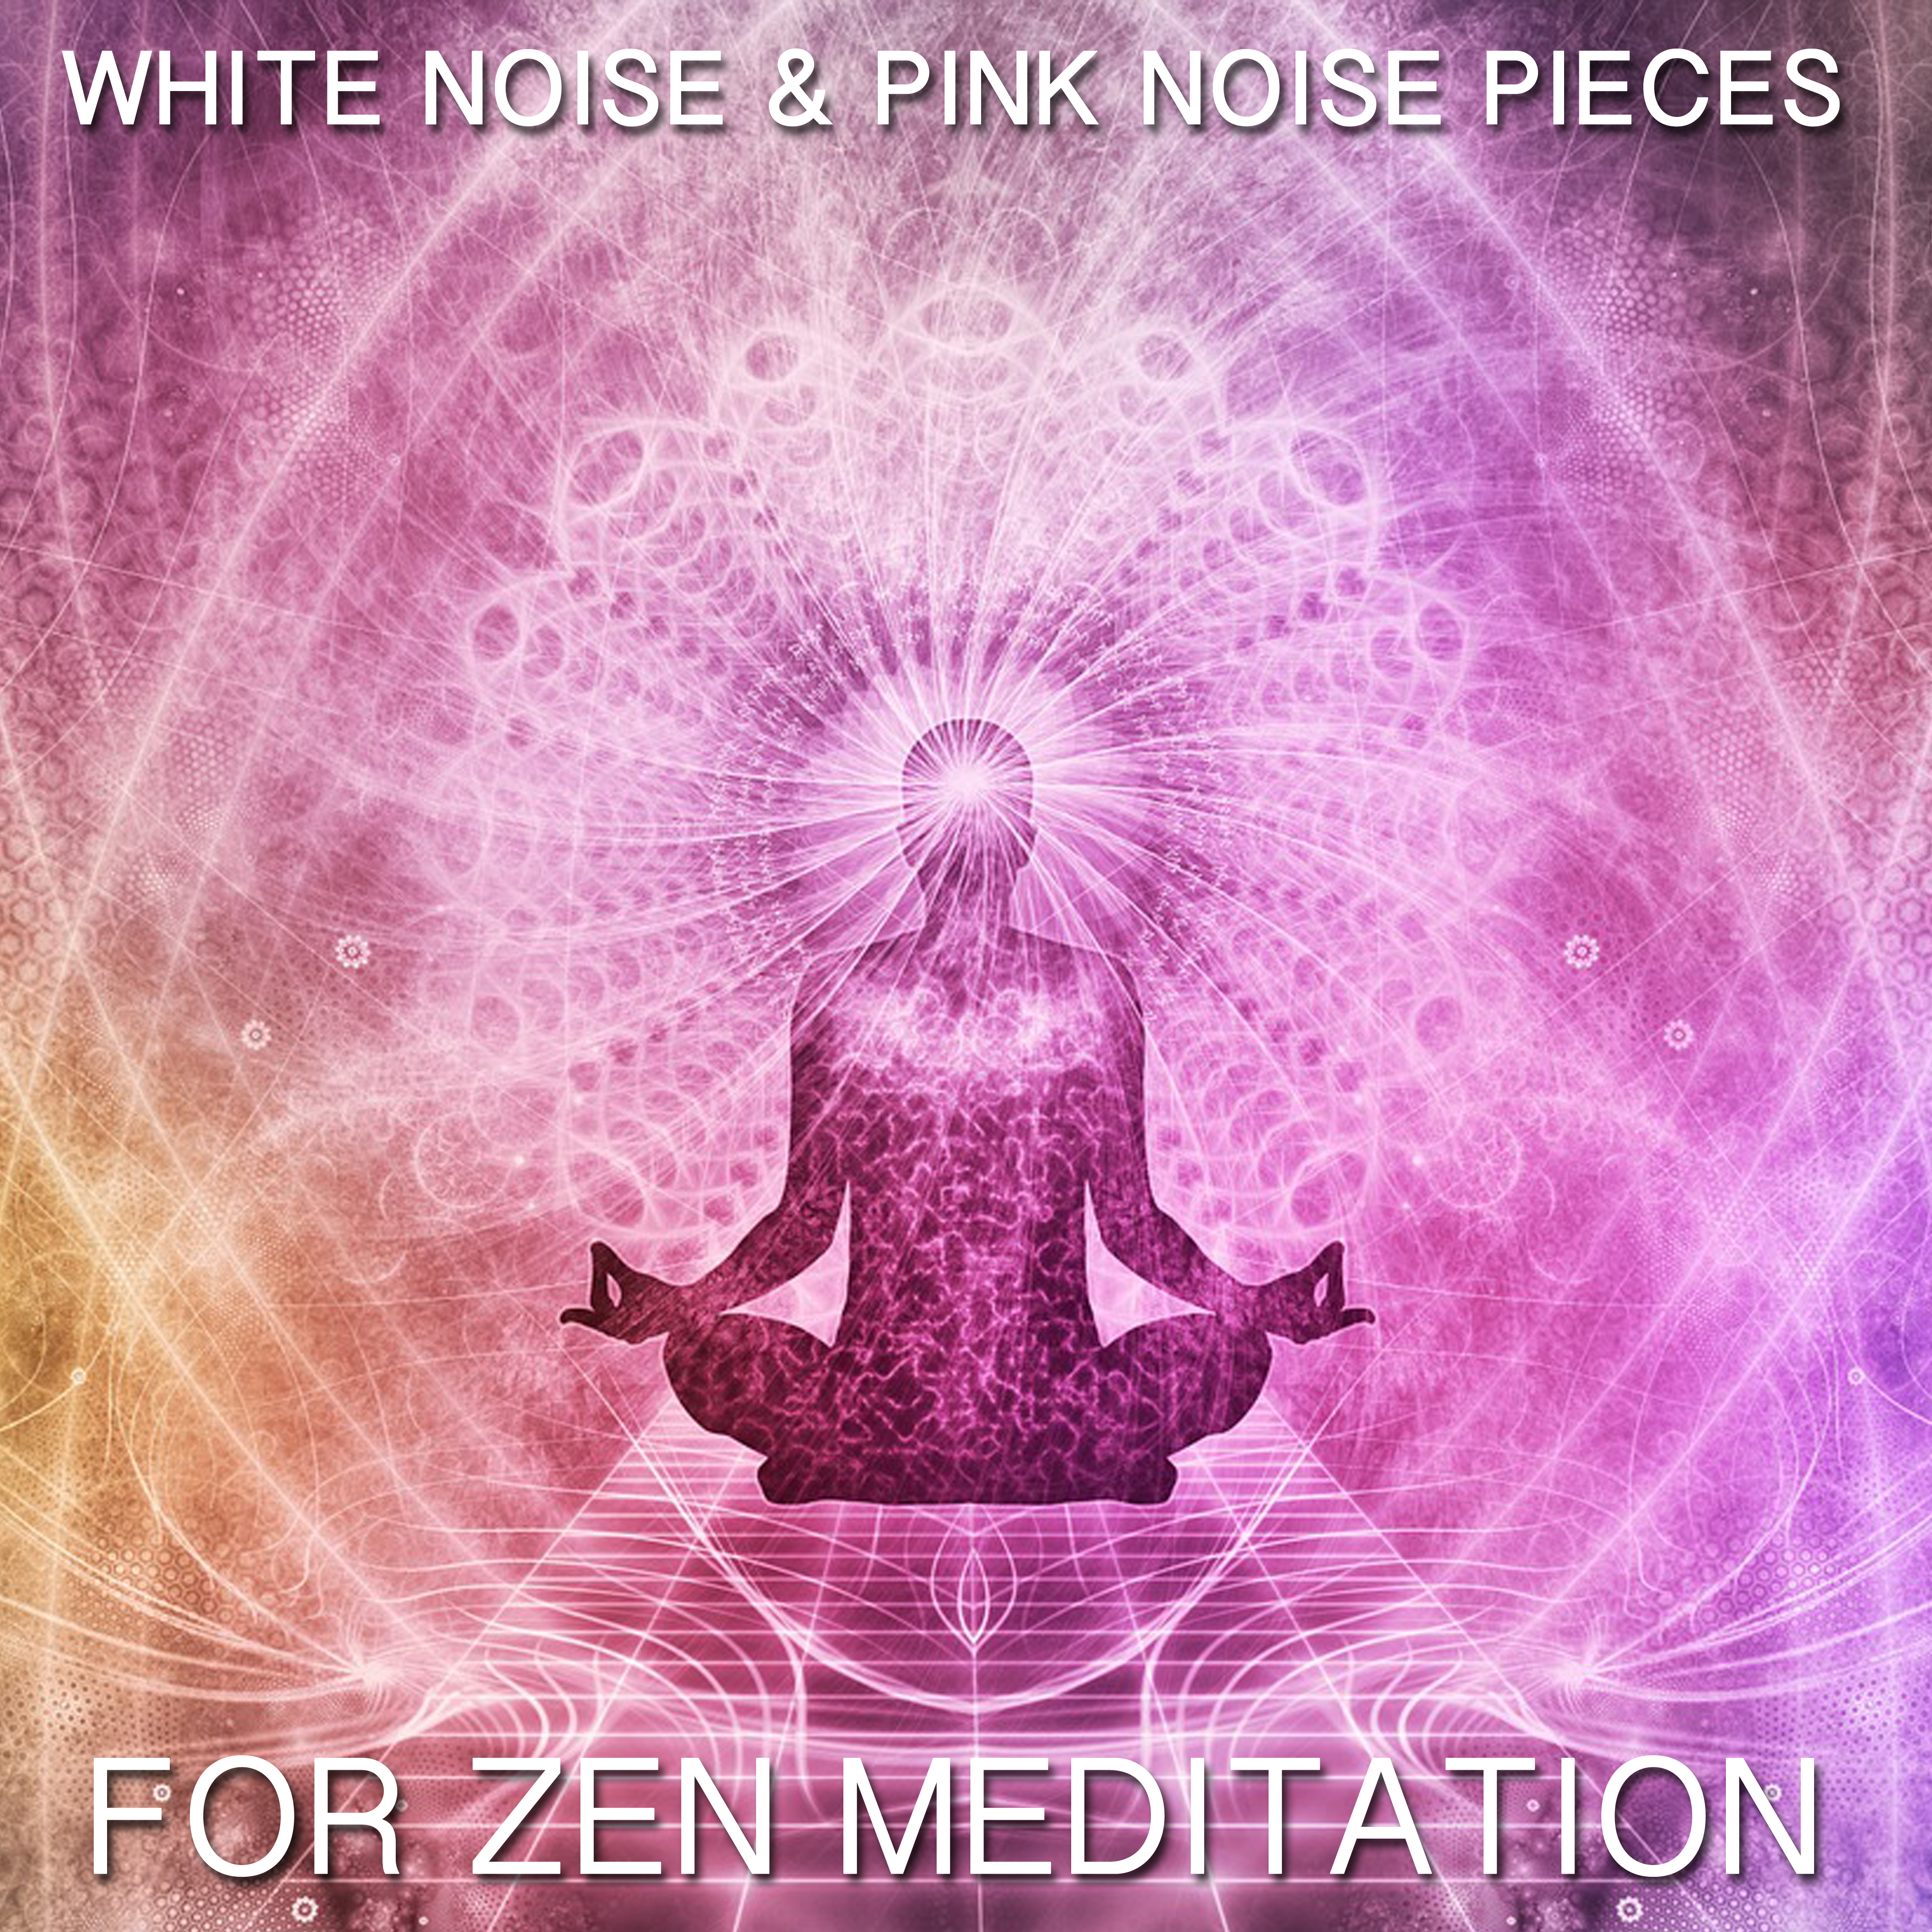 15 White Noise & Pink Noise Pieces for Zen Meditation